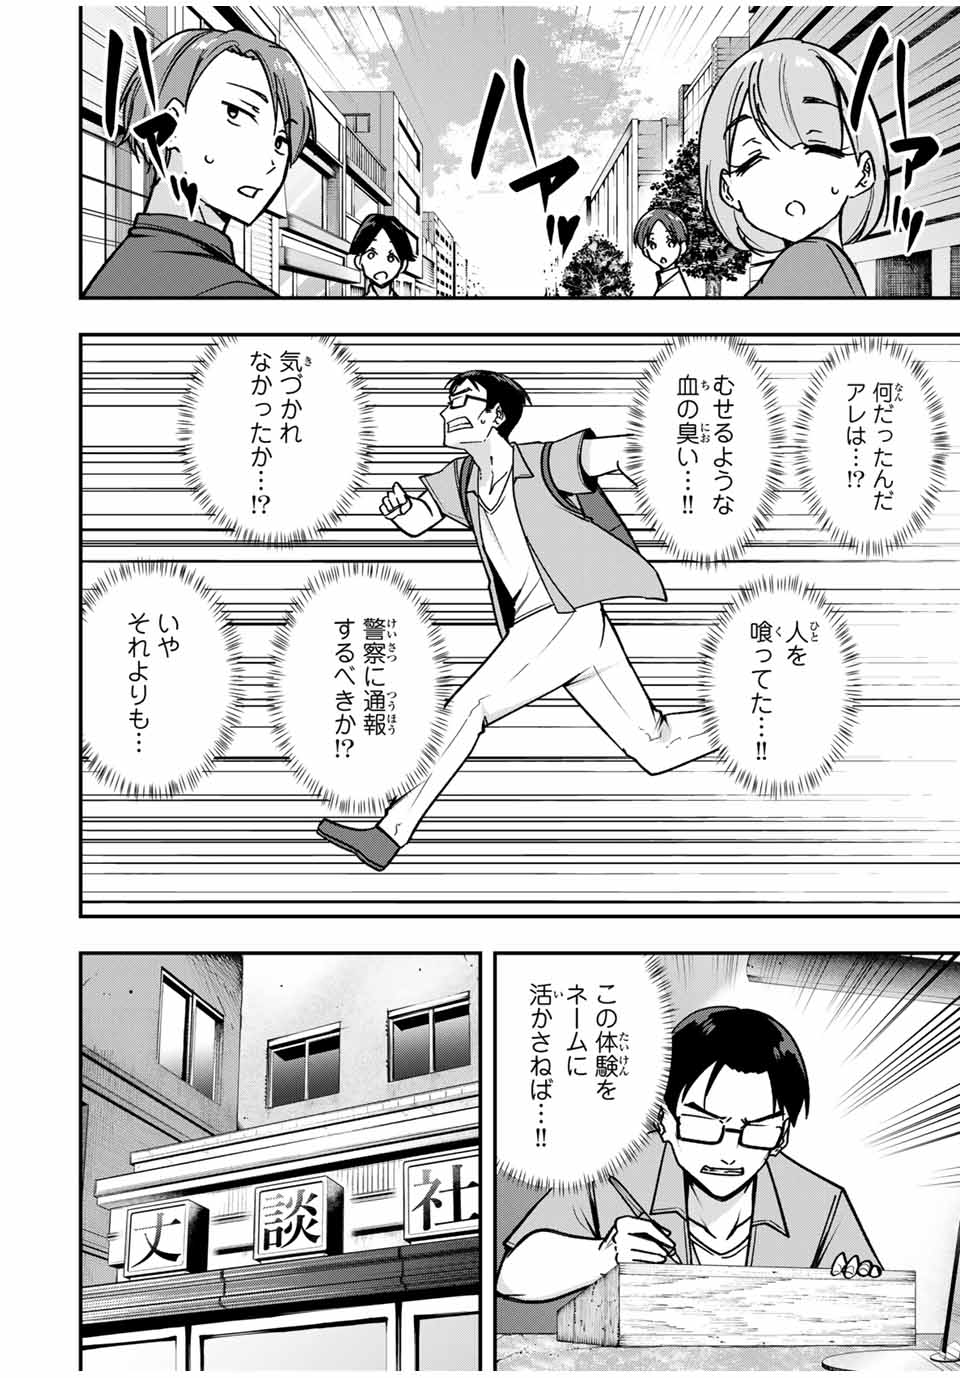 Heroine wa xx Okasegitai - Chapter 11 - Page 8